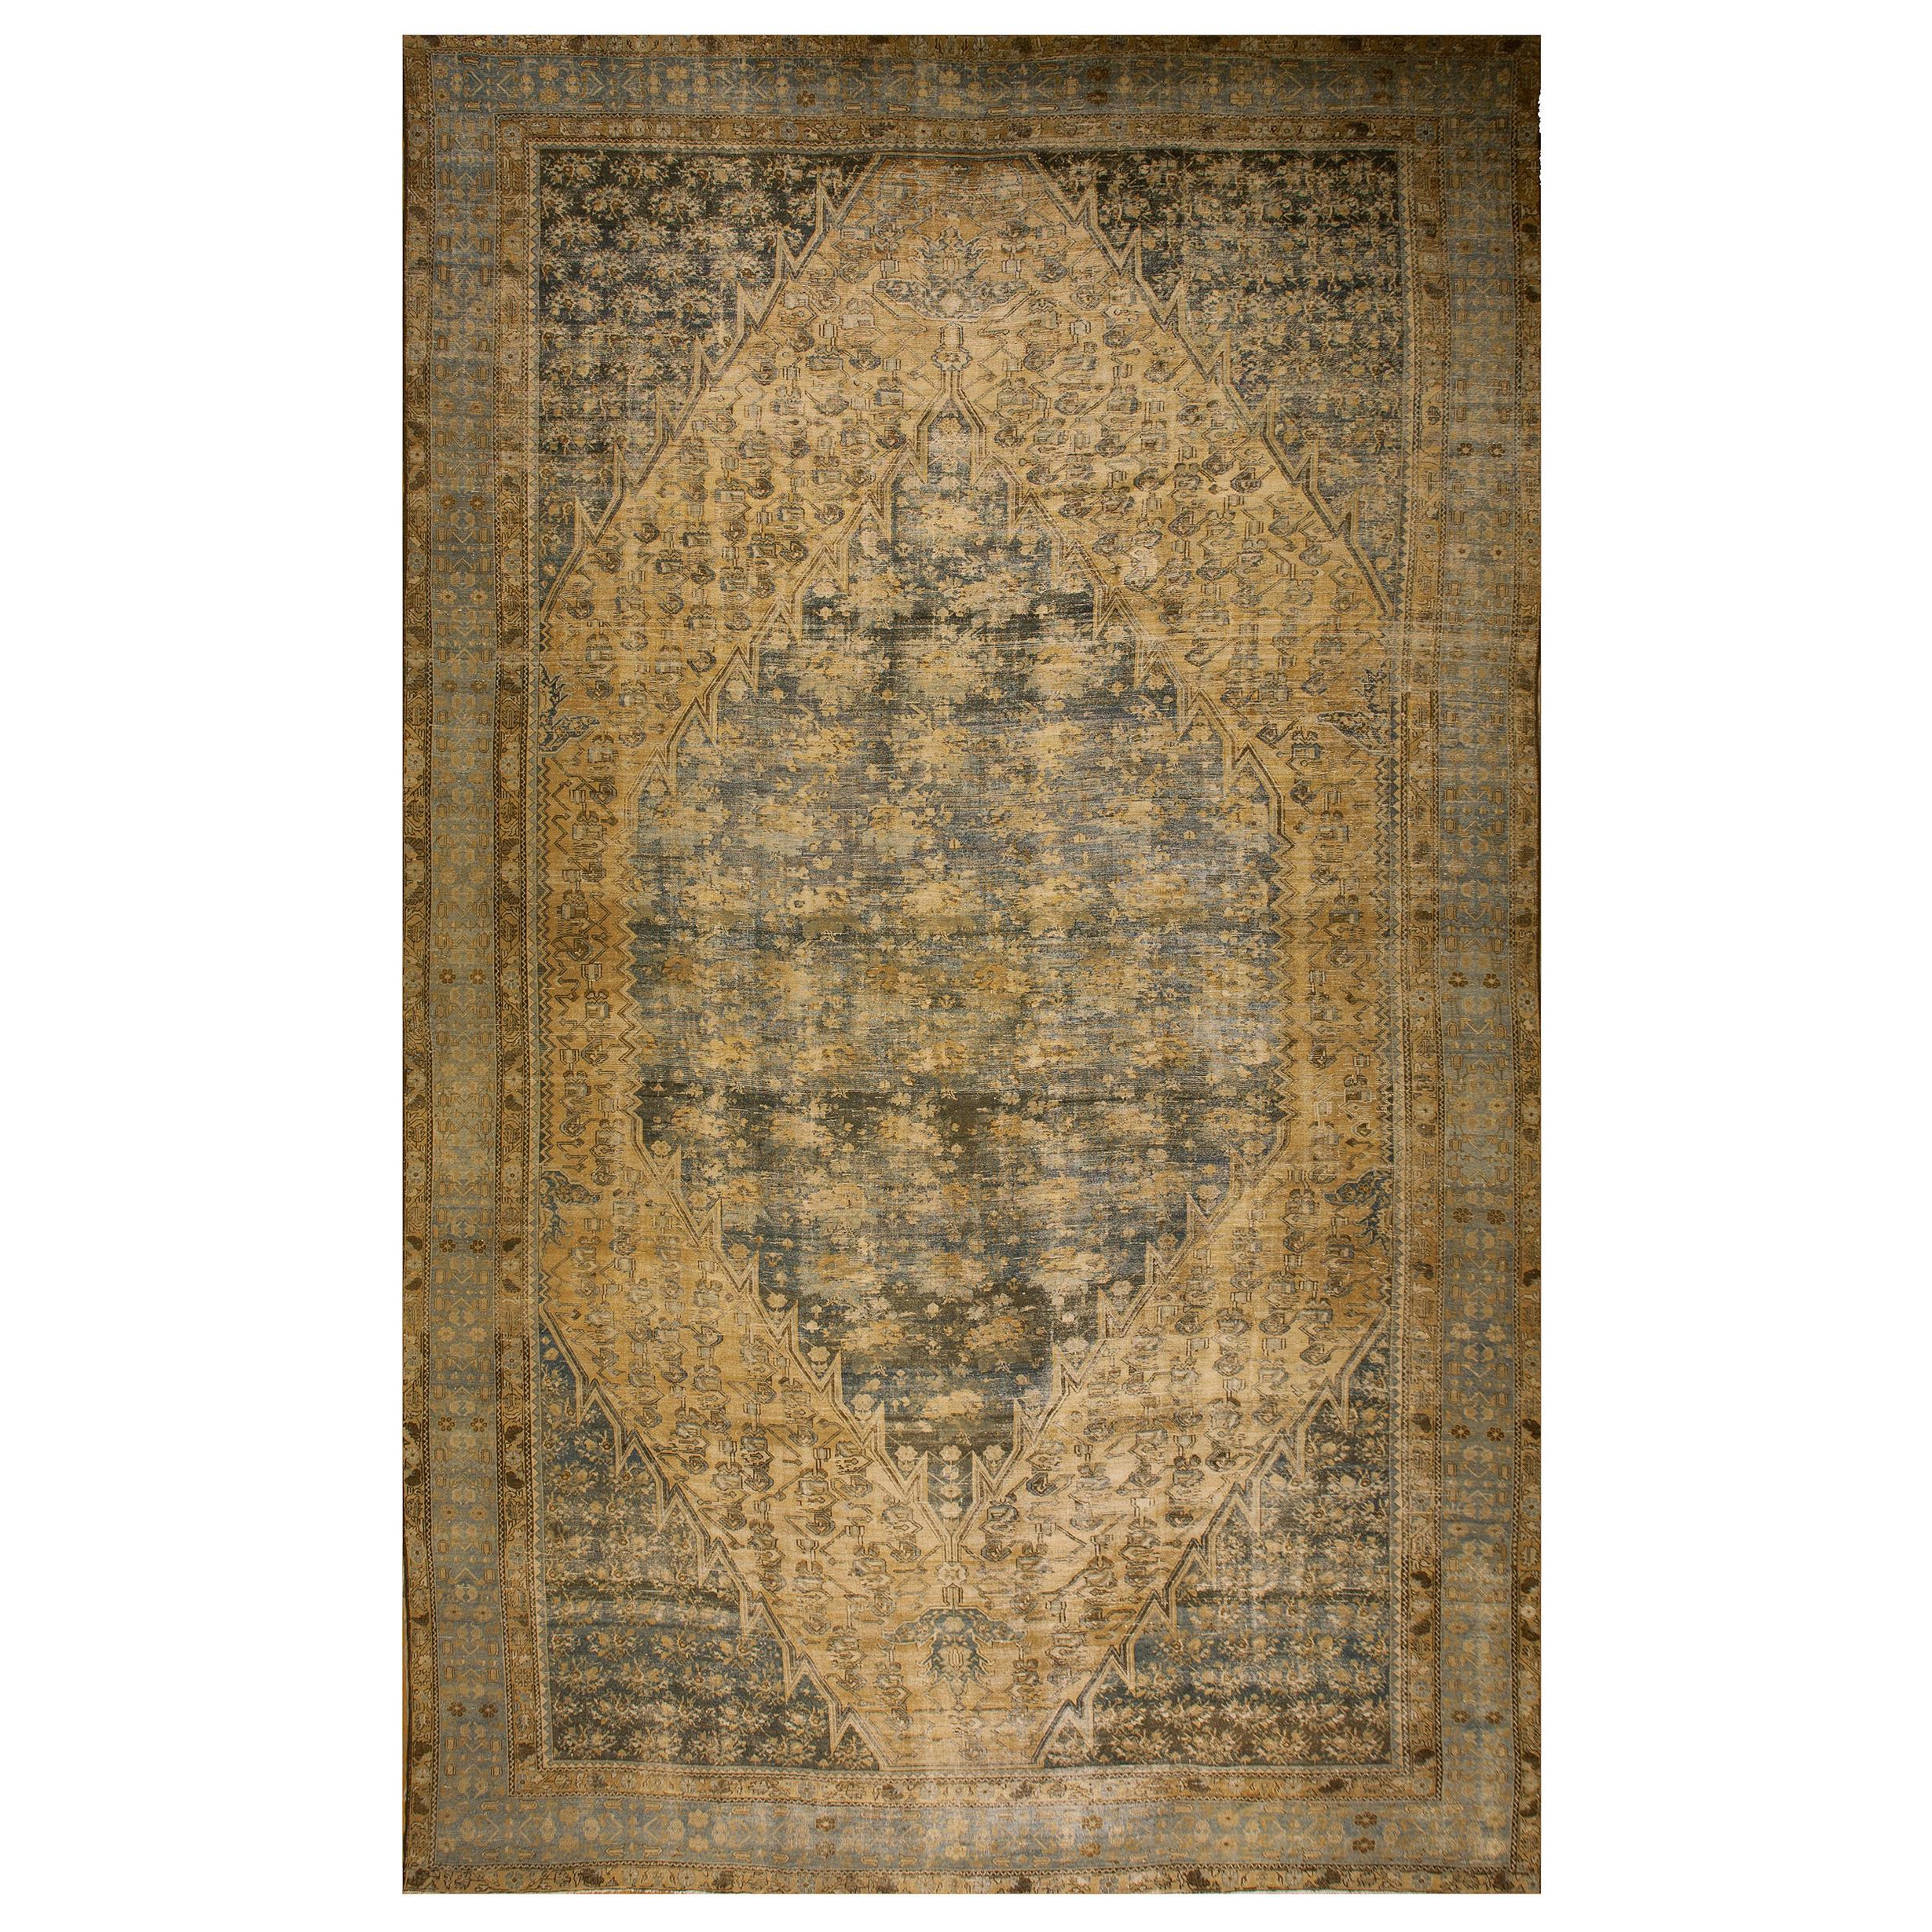 Early 20th Century Persian Malayer Carpet ( 12'3'' x 21'2'' - 373 x 645 )